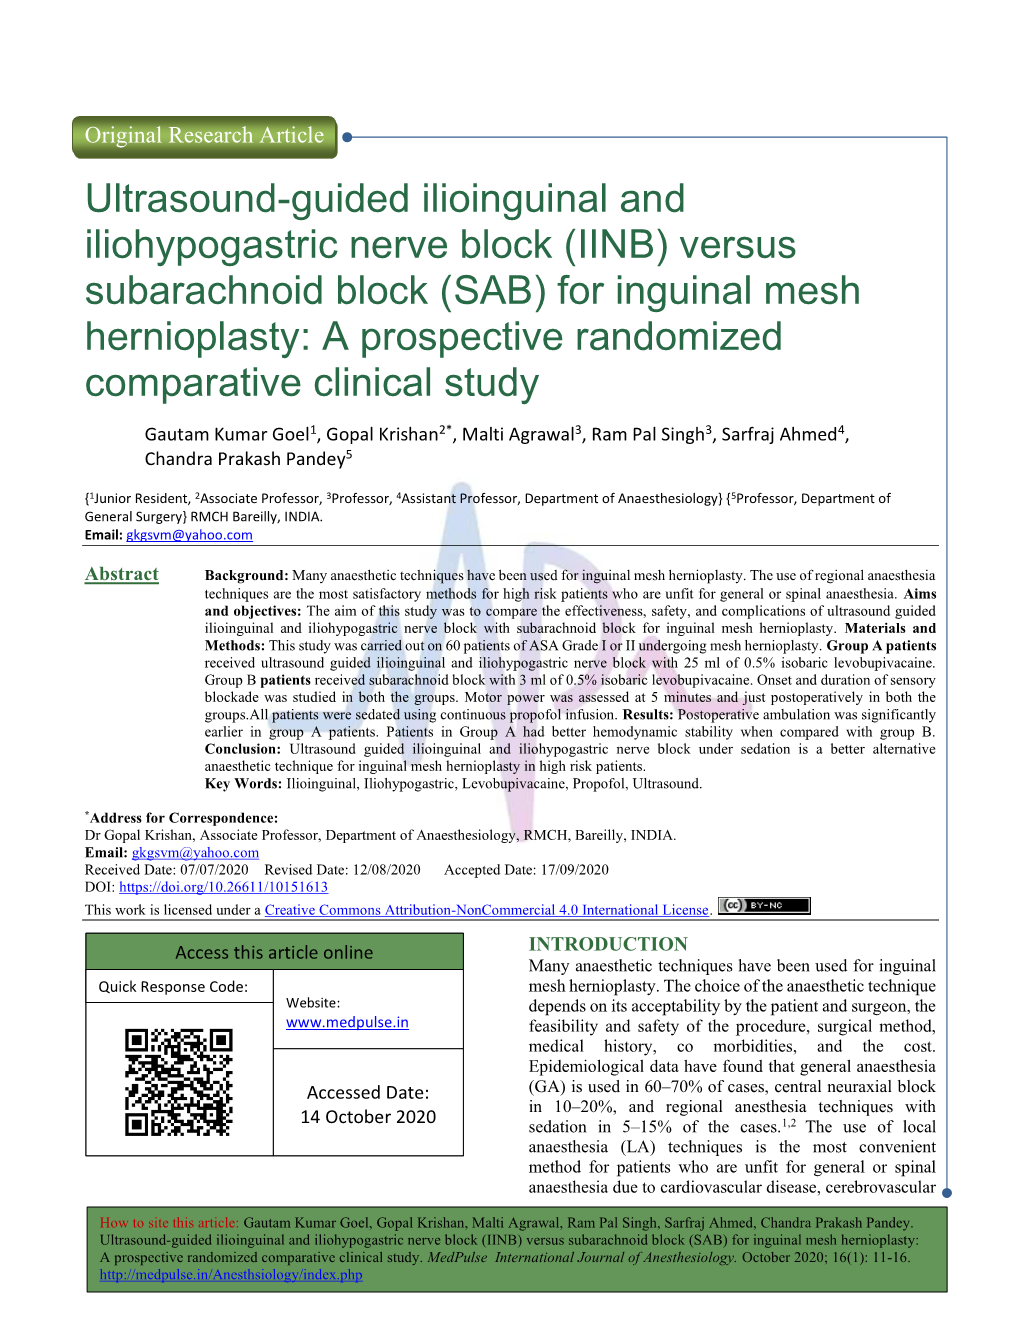 Ultrasound-Guided Ilioinguinal and Iliohypogastric Nerve Block (IINB)